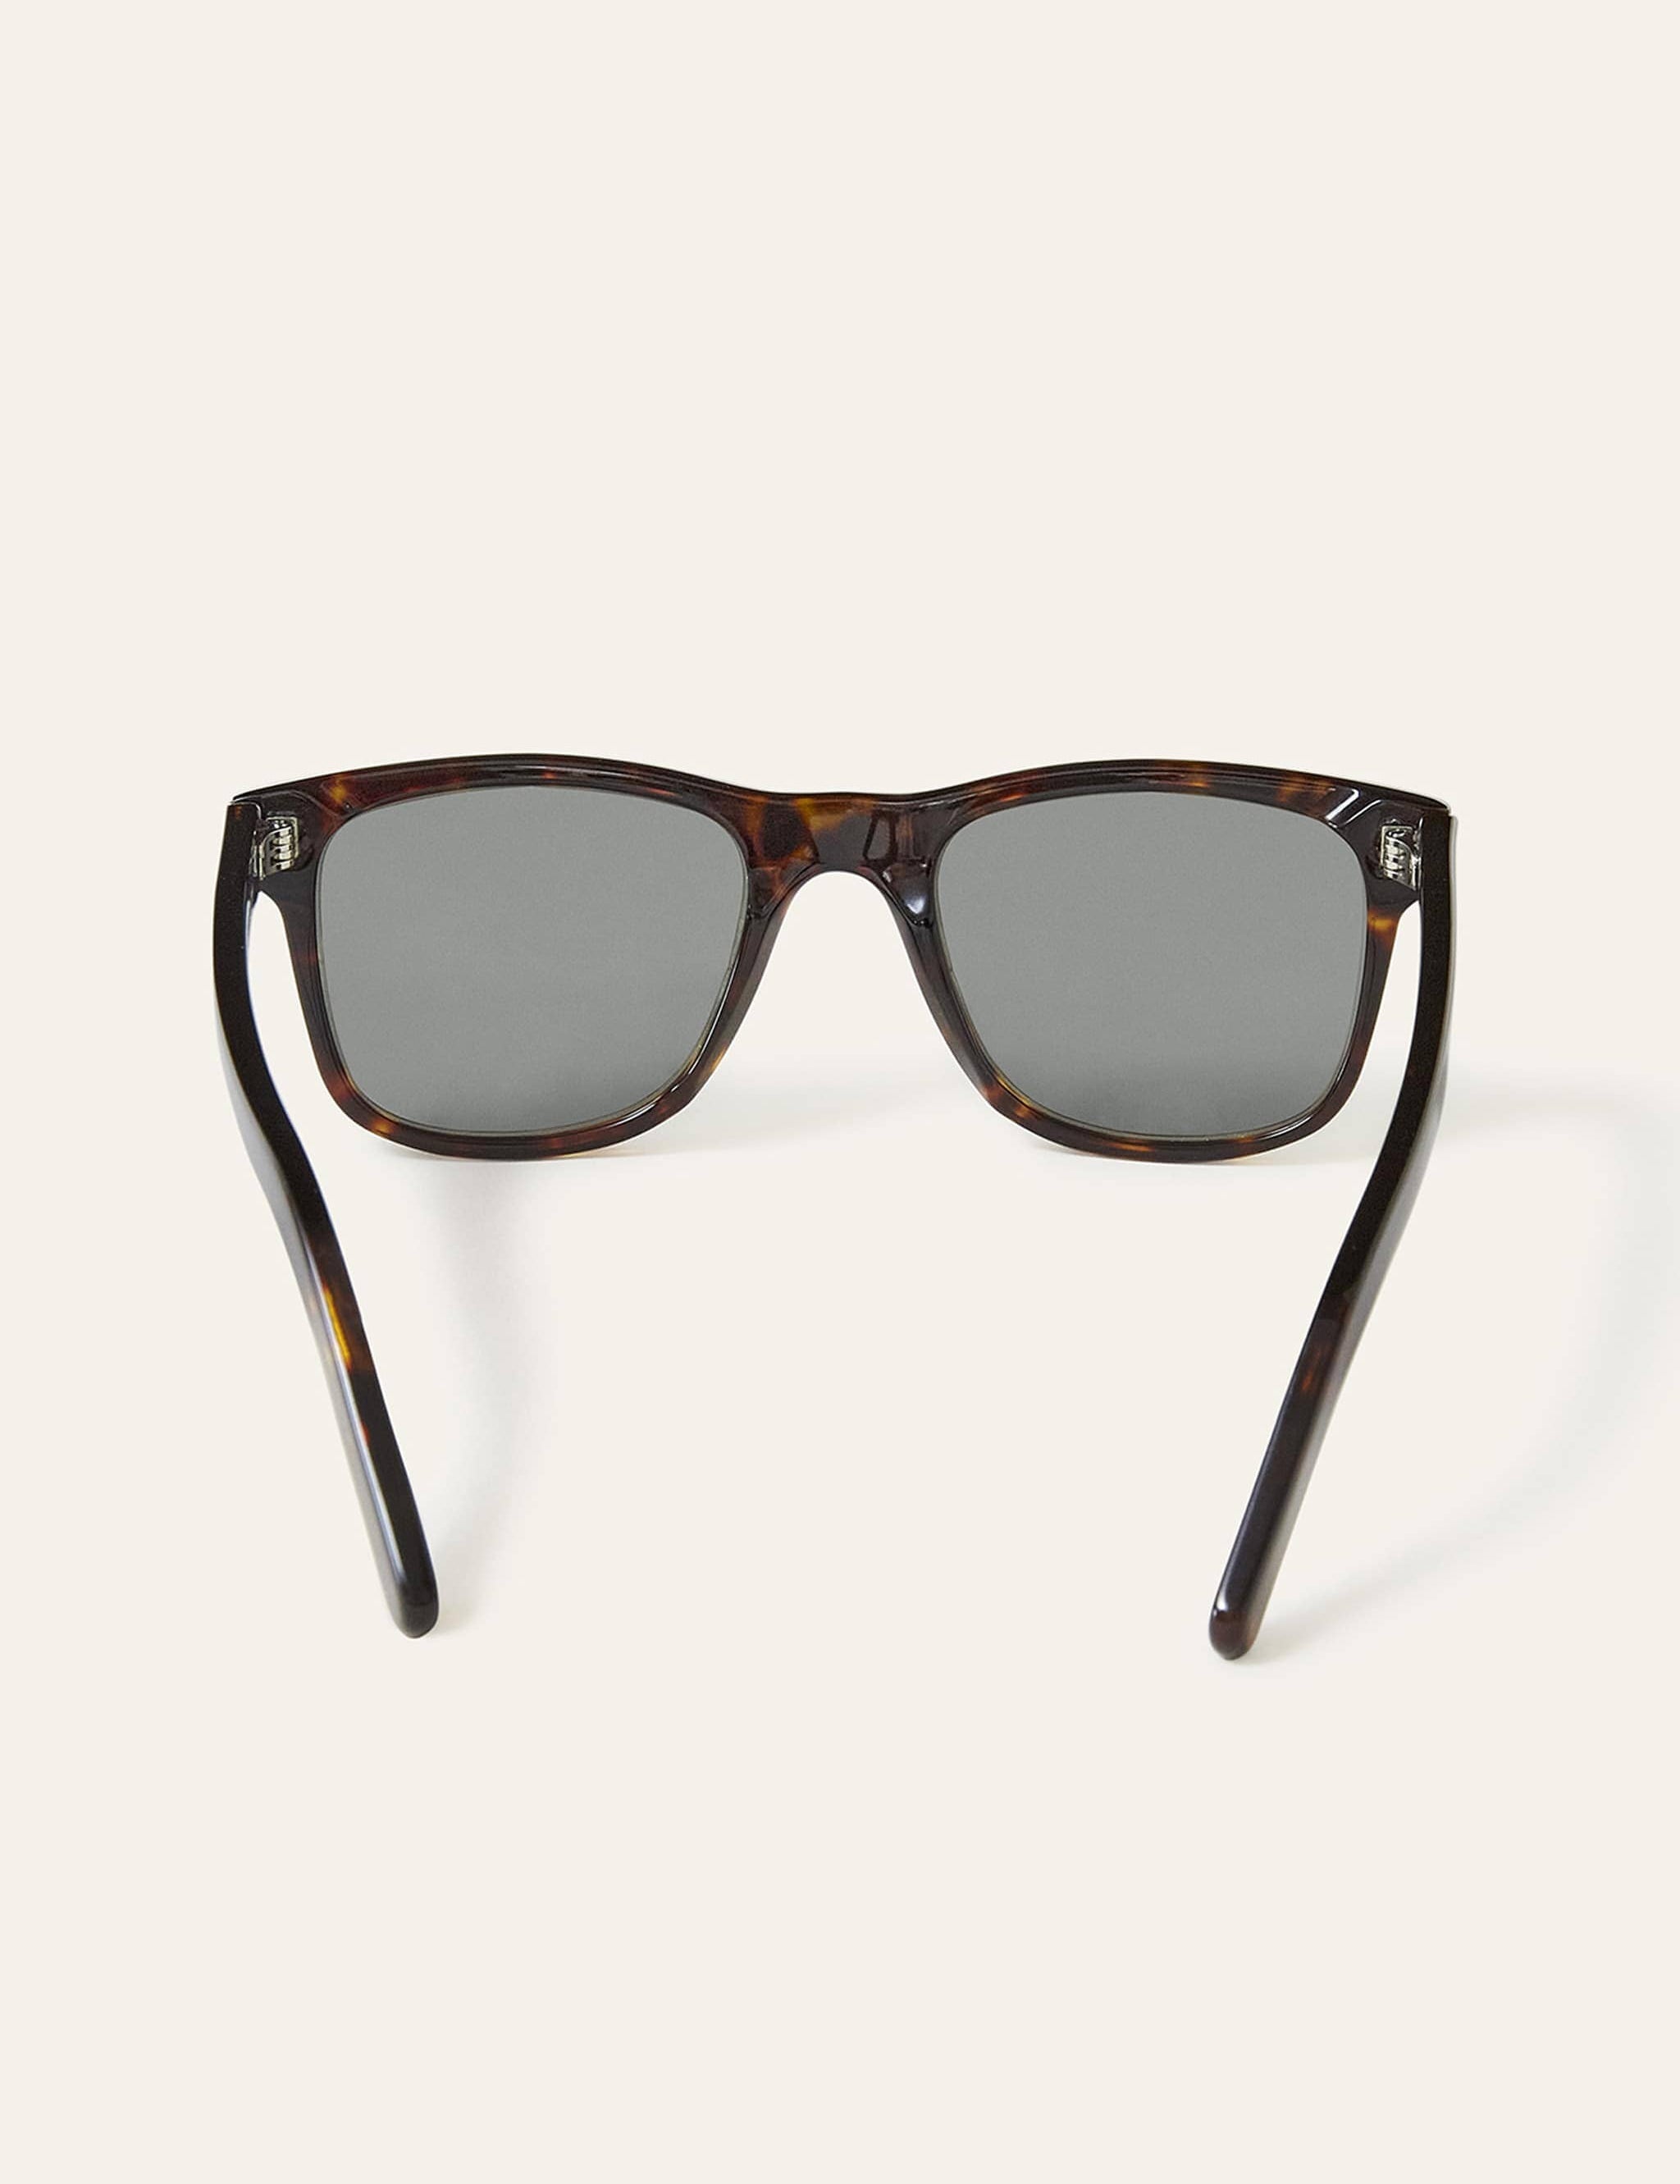 tortoiseshell-journey-sunglasses-957715.jpg